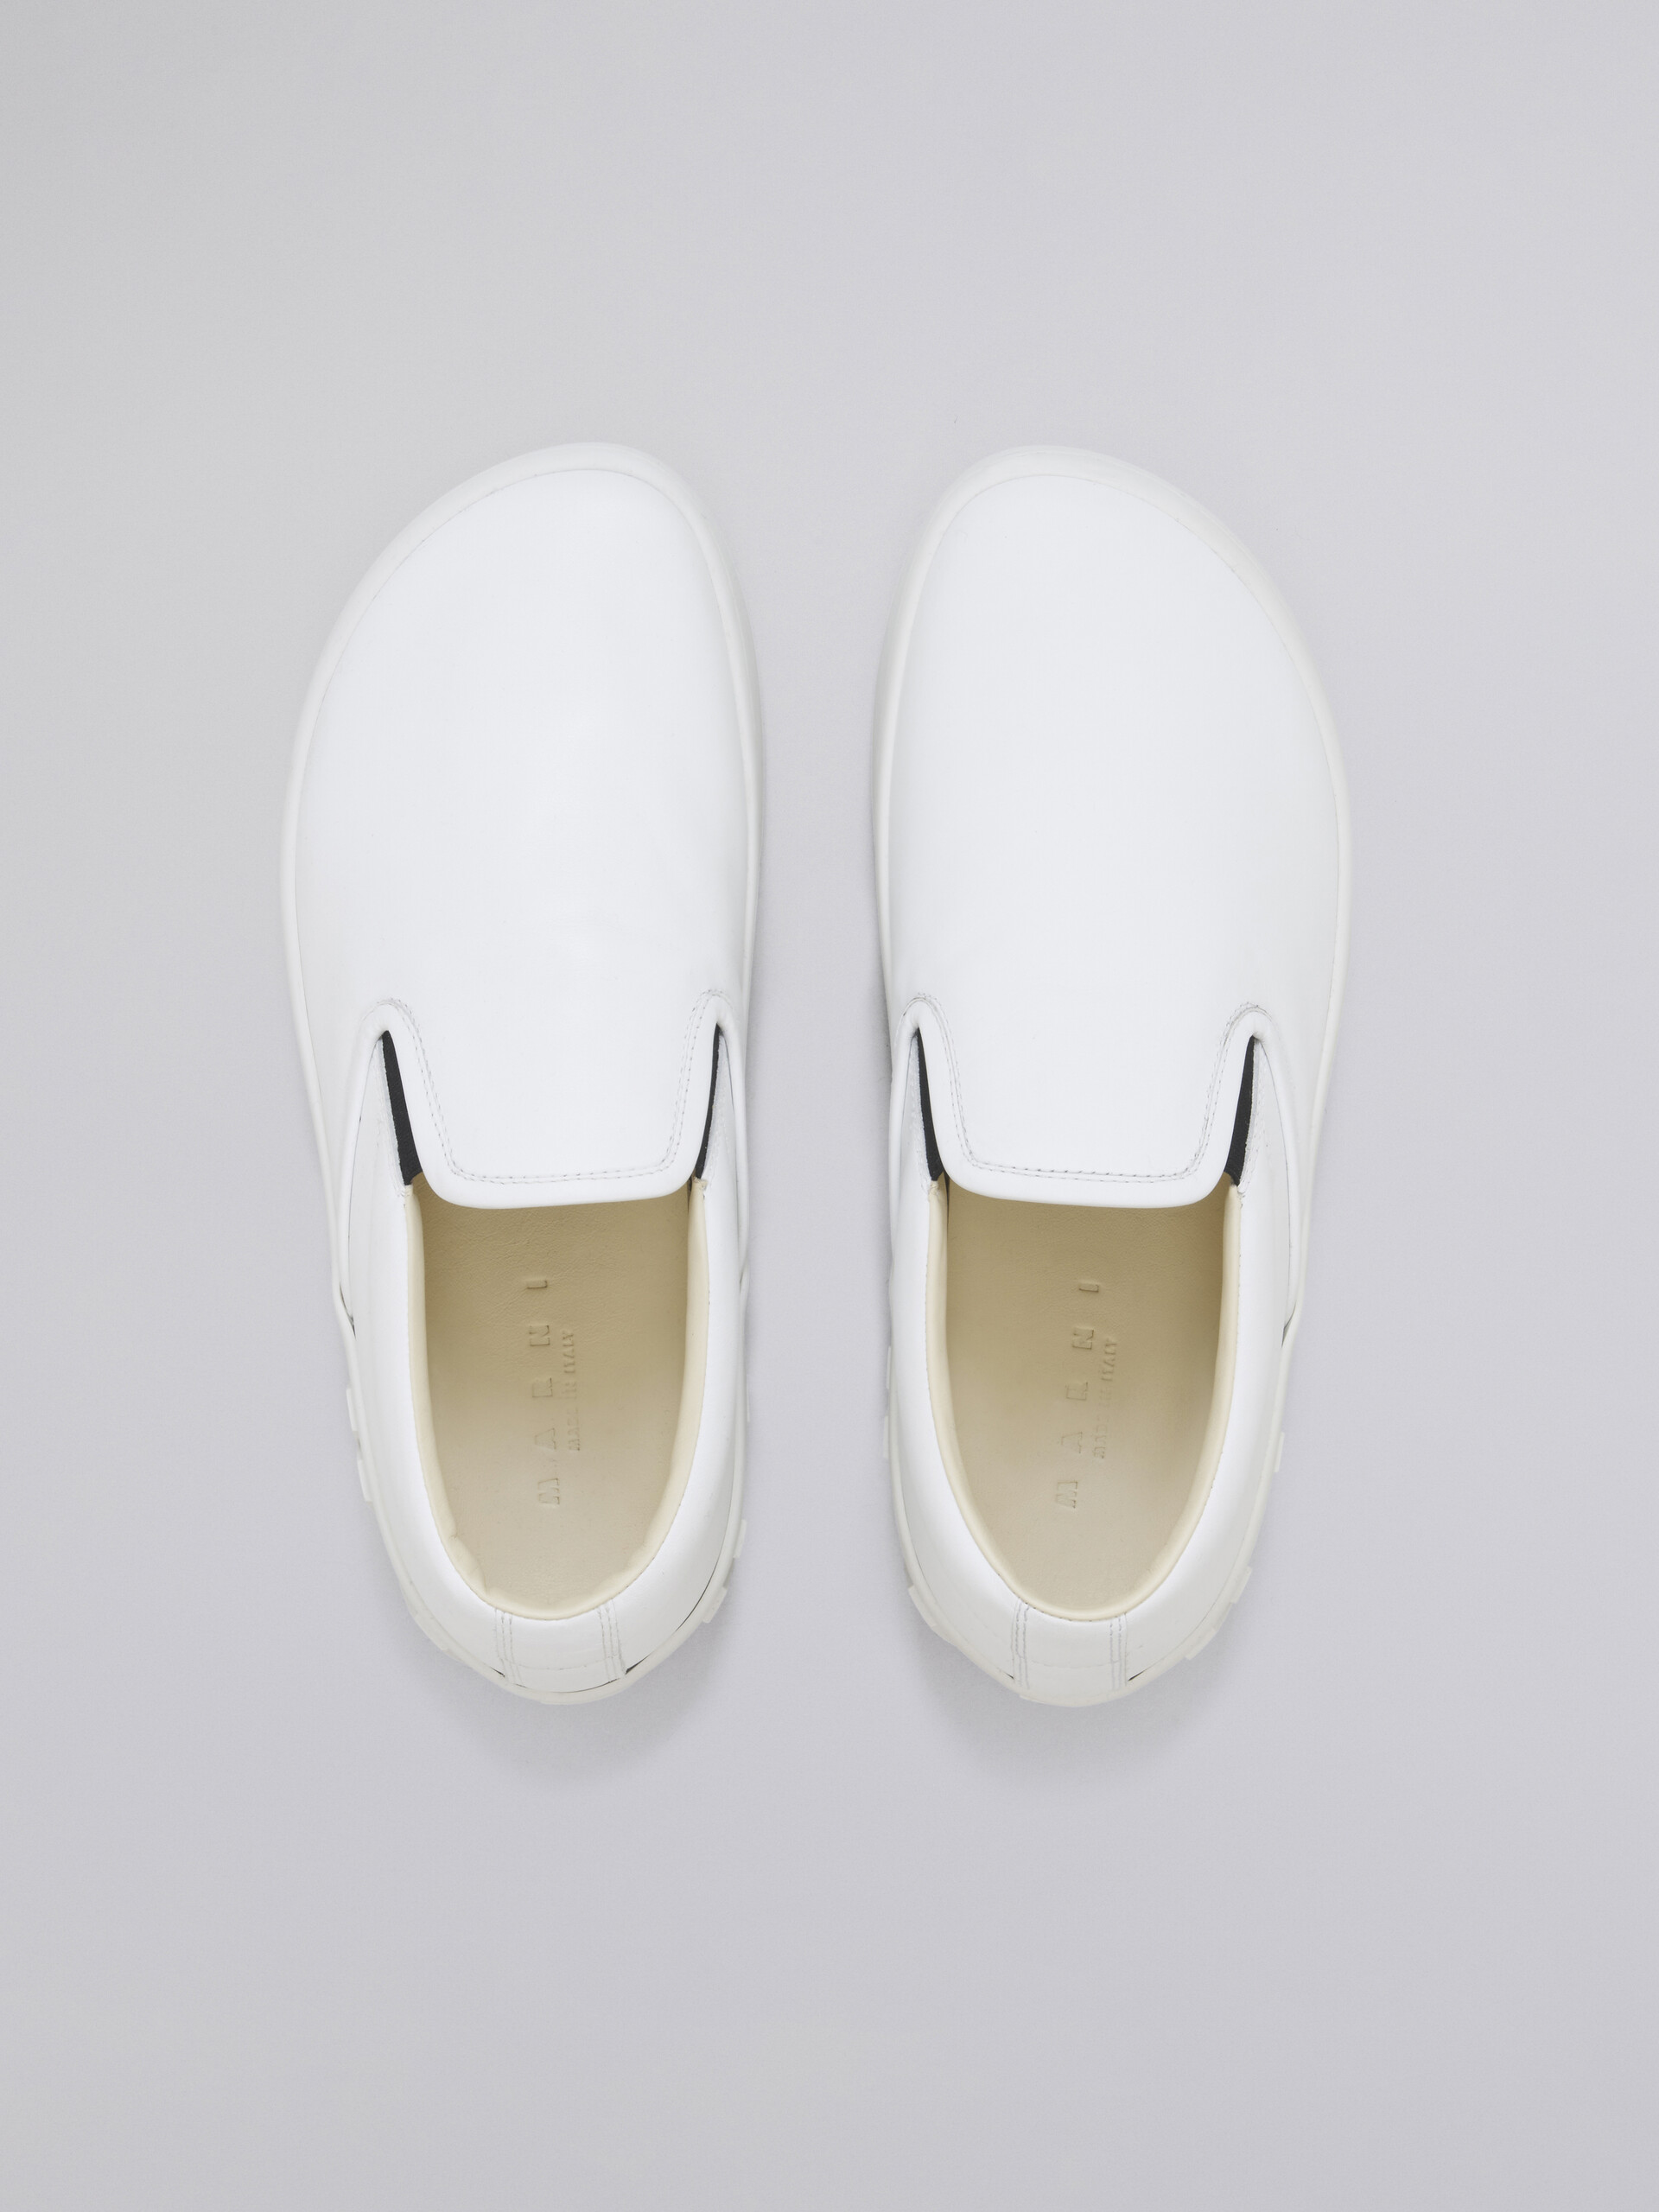 Sneaker slip-on in vitello bianco con maxi logo Marni in rilievo - Sneakers - Image 4